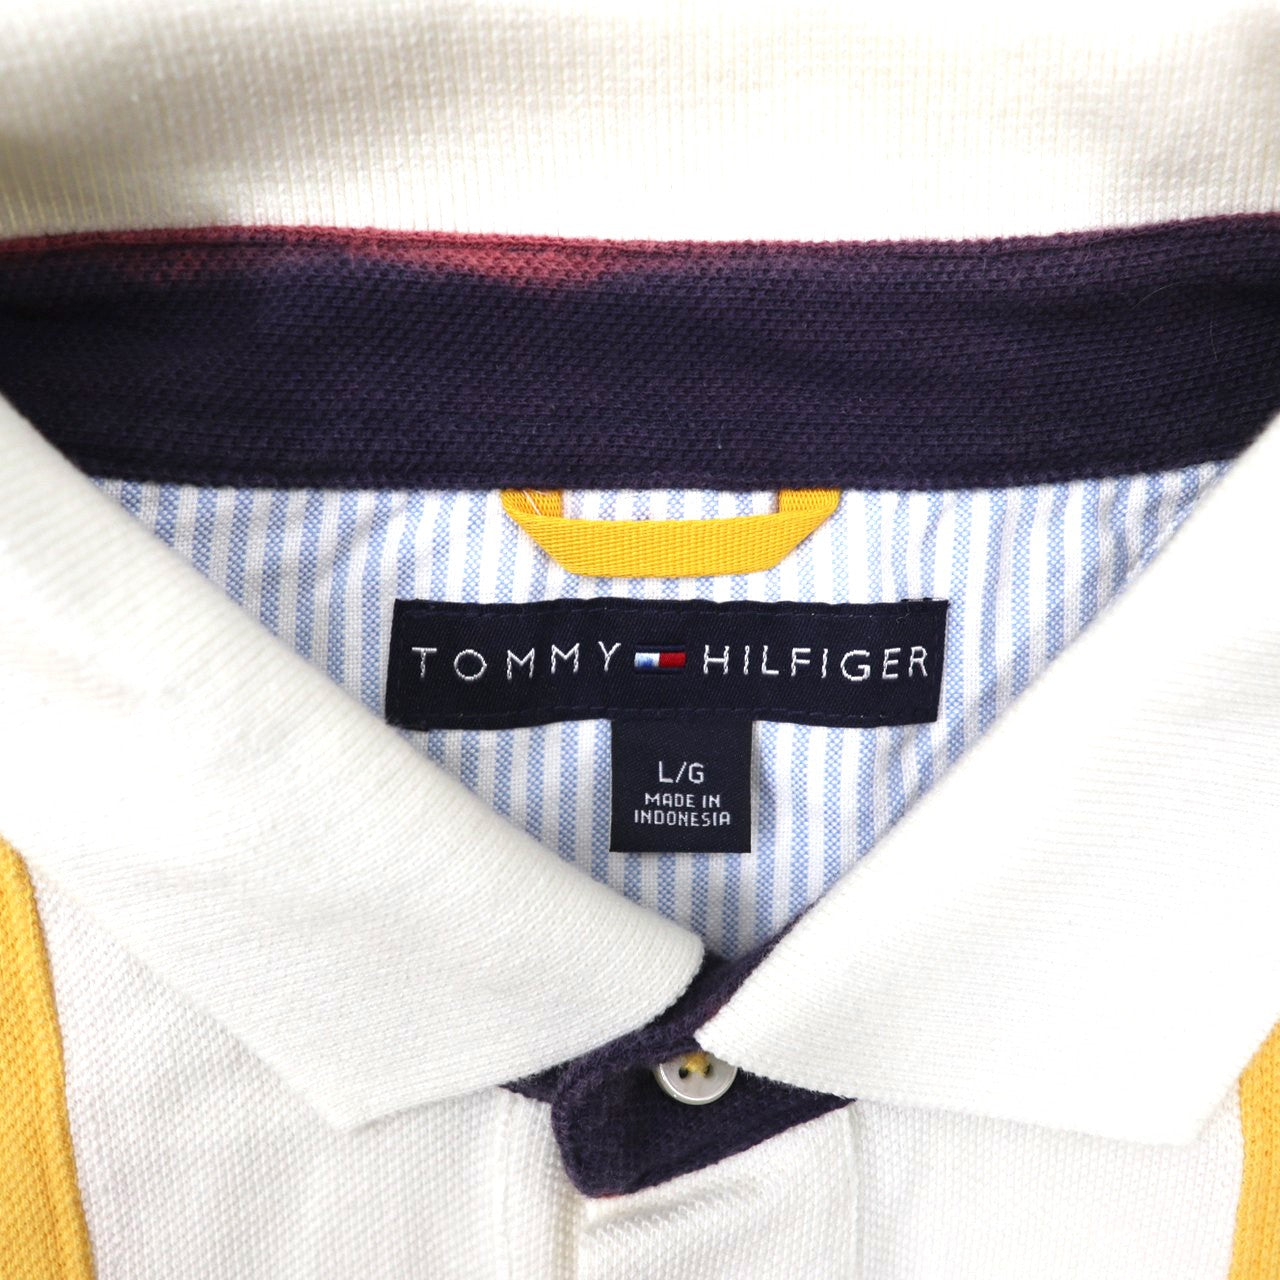 TOMMY HILFIGER ラガーシャツ L イエロー ネイビー コットン 90年代